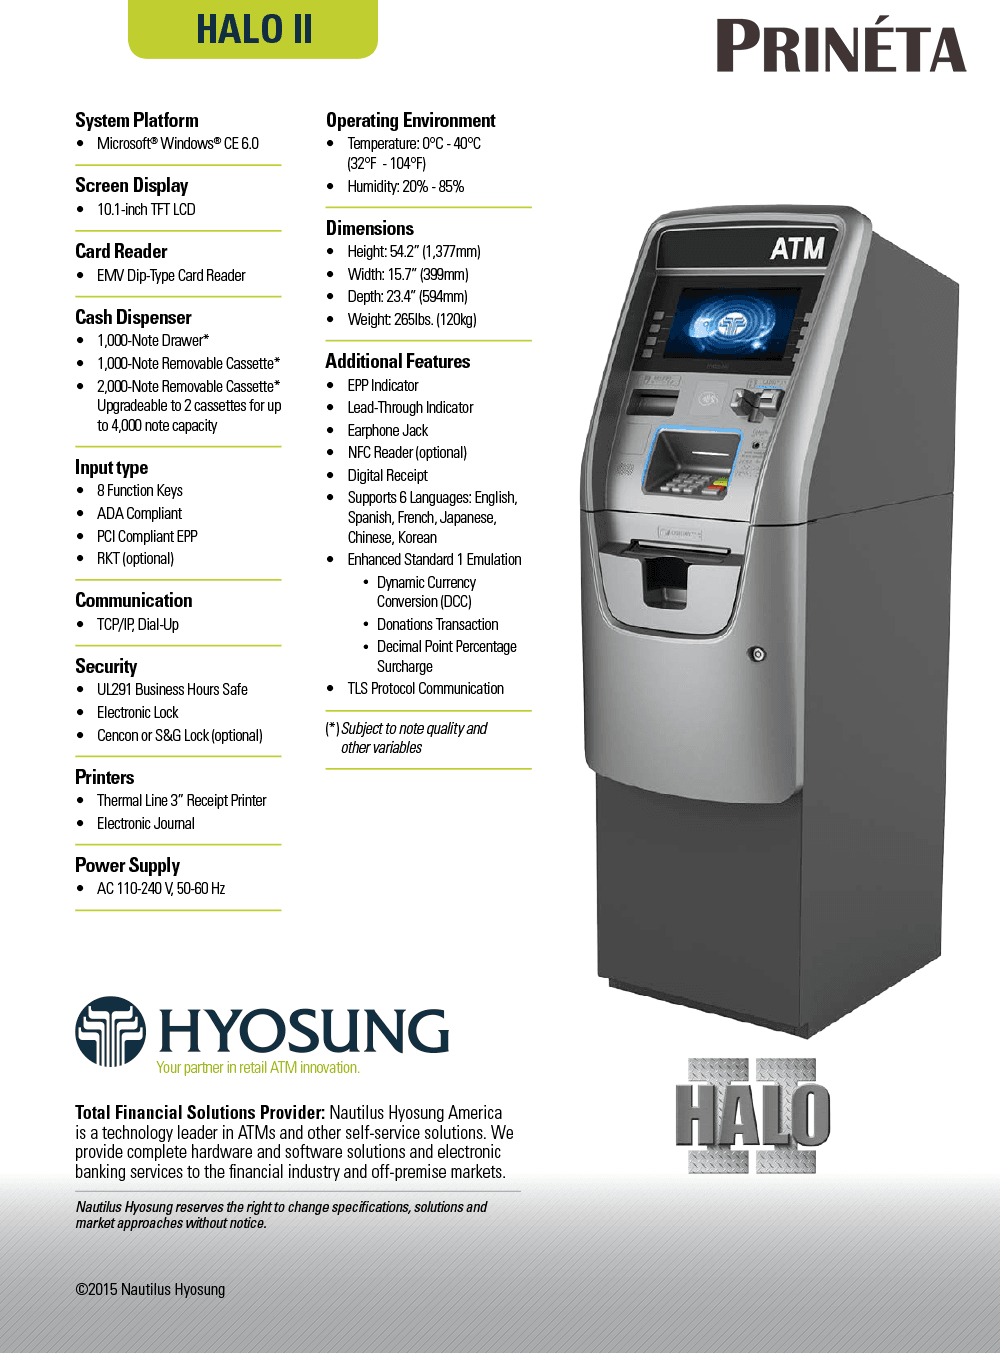 Nautilus Hyosung Halo II ATM Machine 